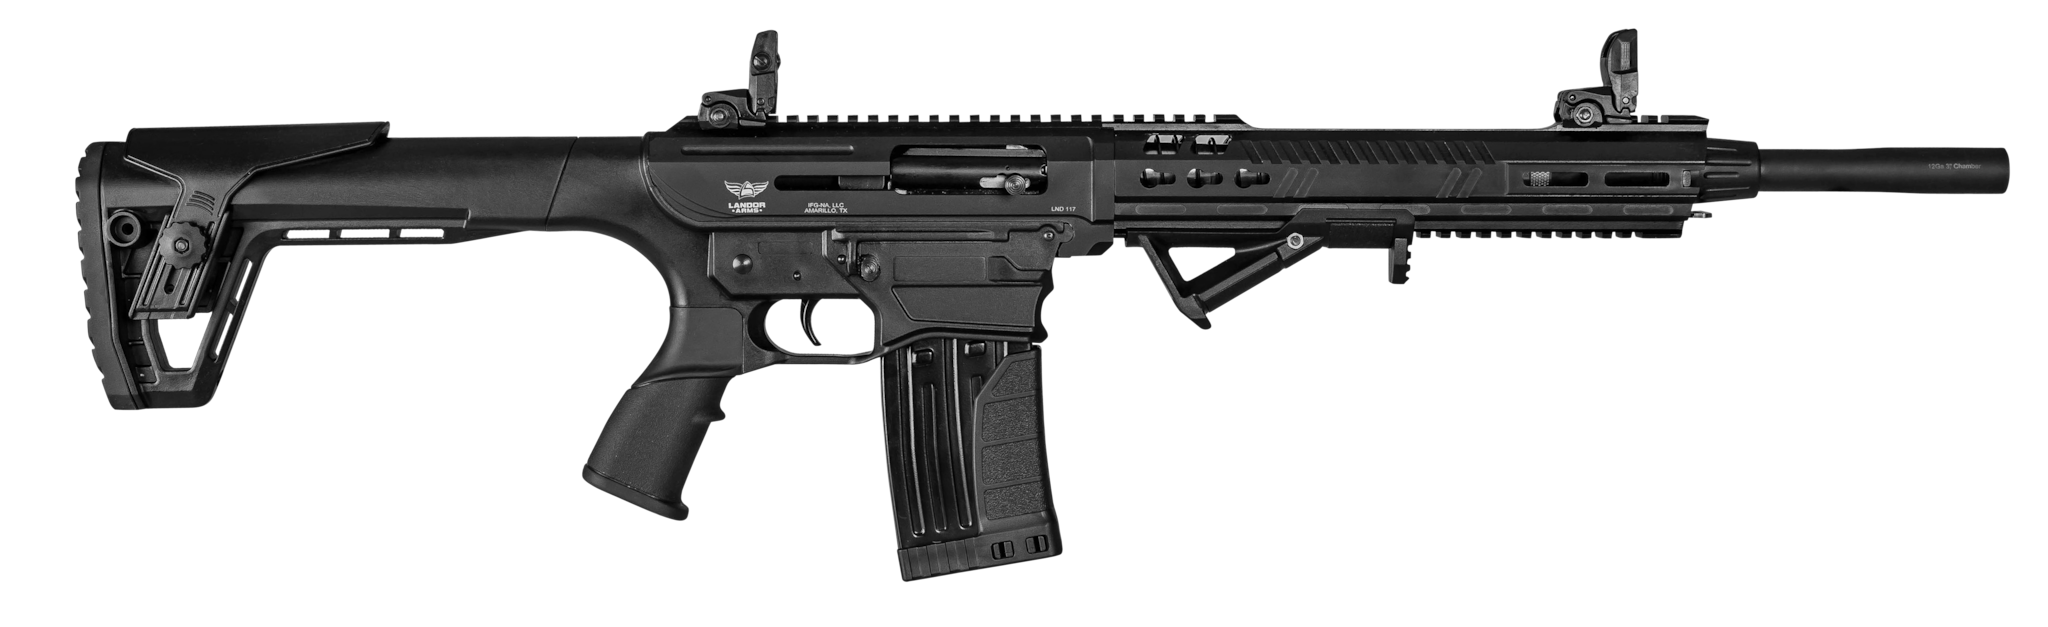 Image of LANDOR ARMS AR-SHOTGUN